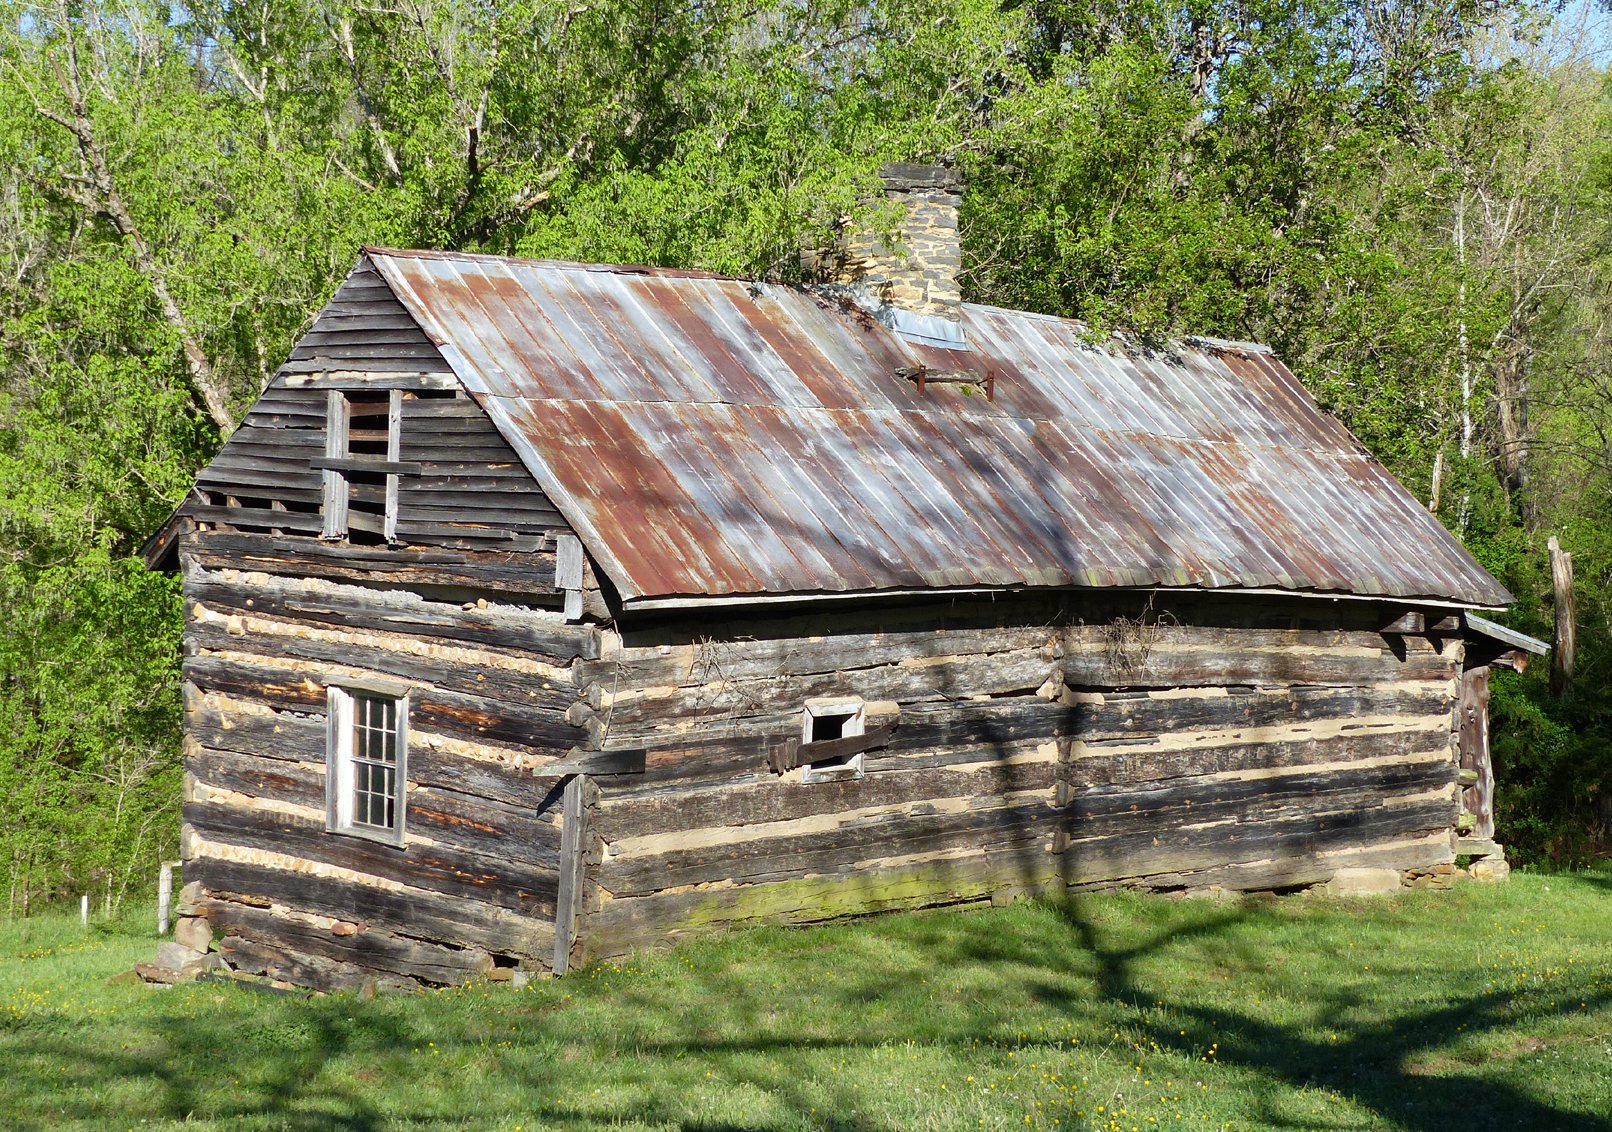 Flat Creek Rural Historic District